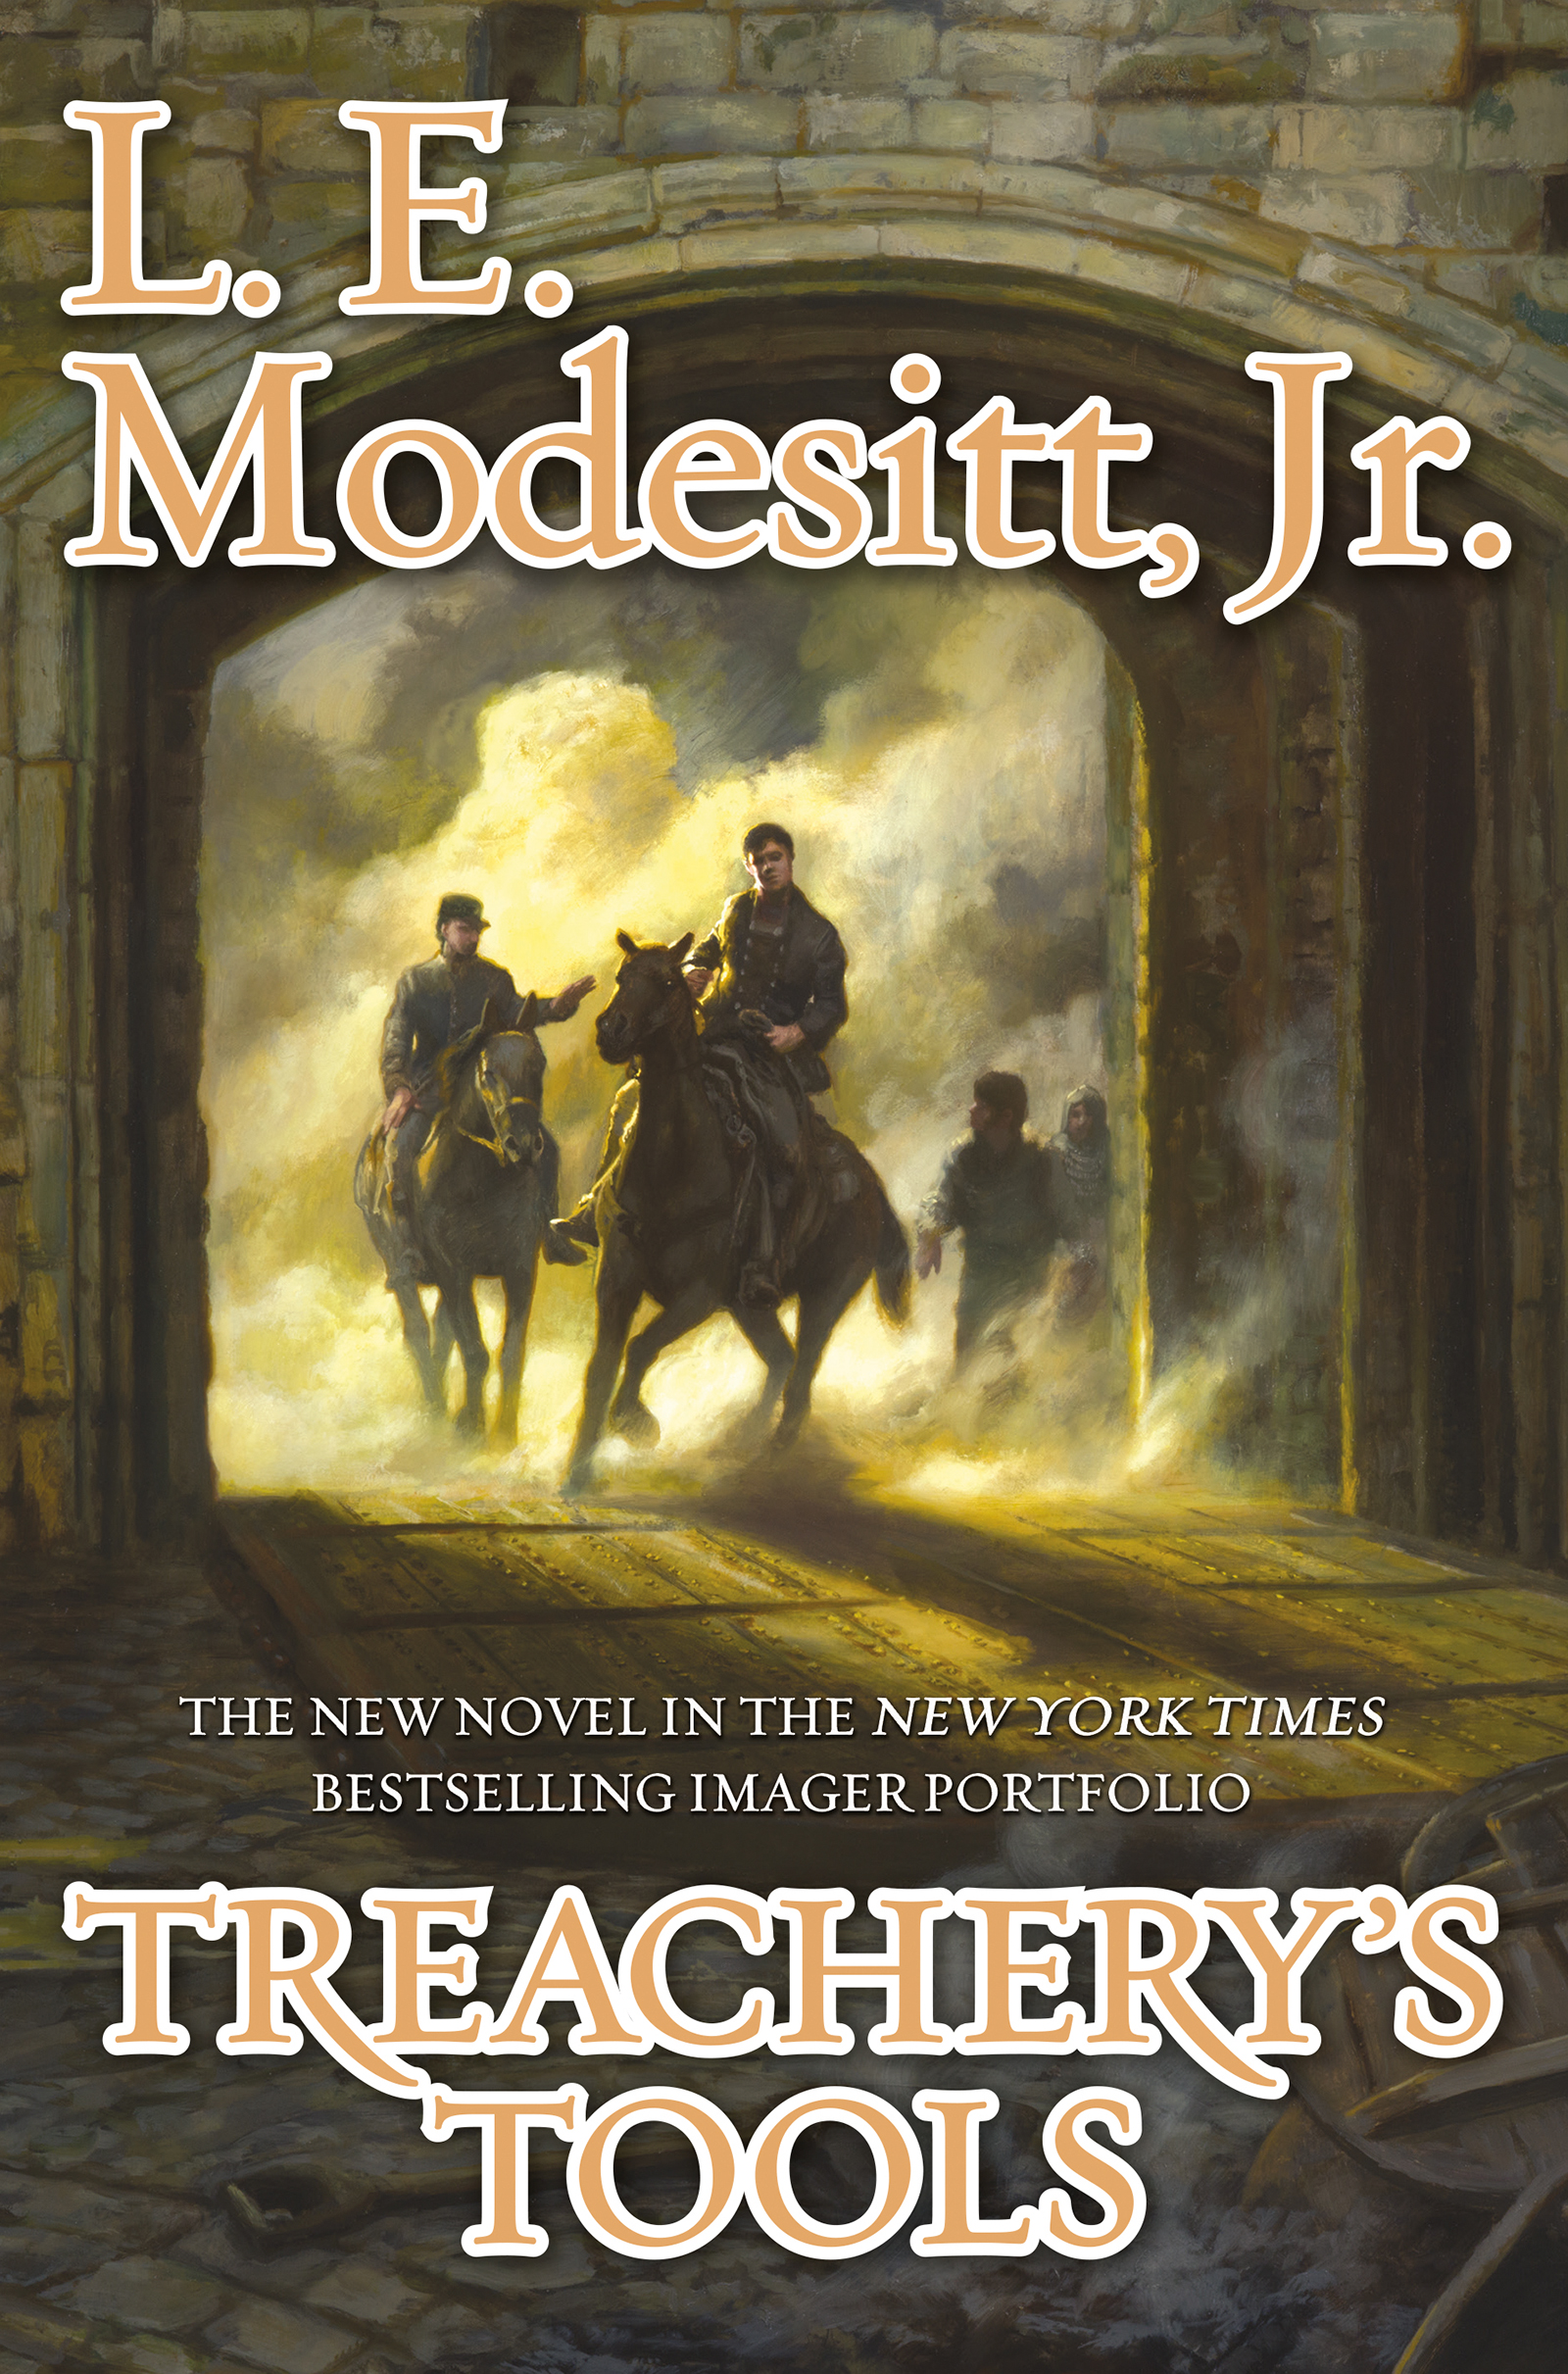 Treachery's Tools by L. E. Modesitt, Jr.